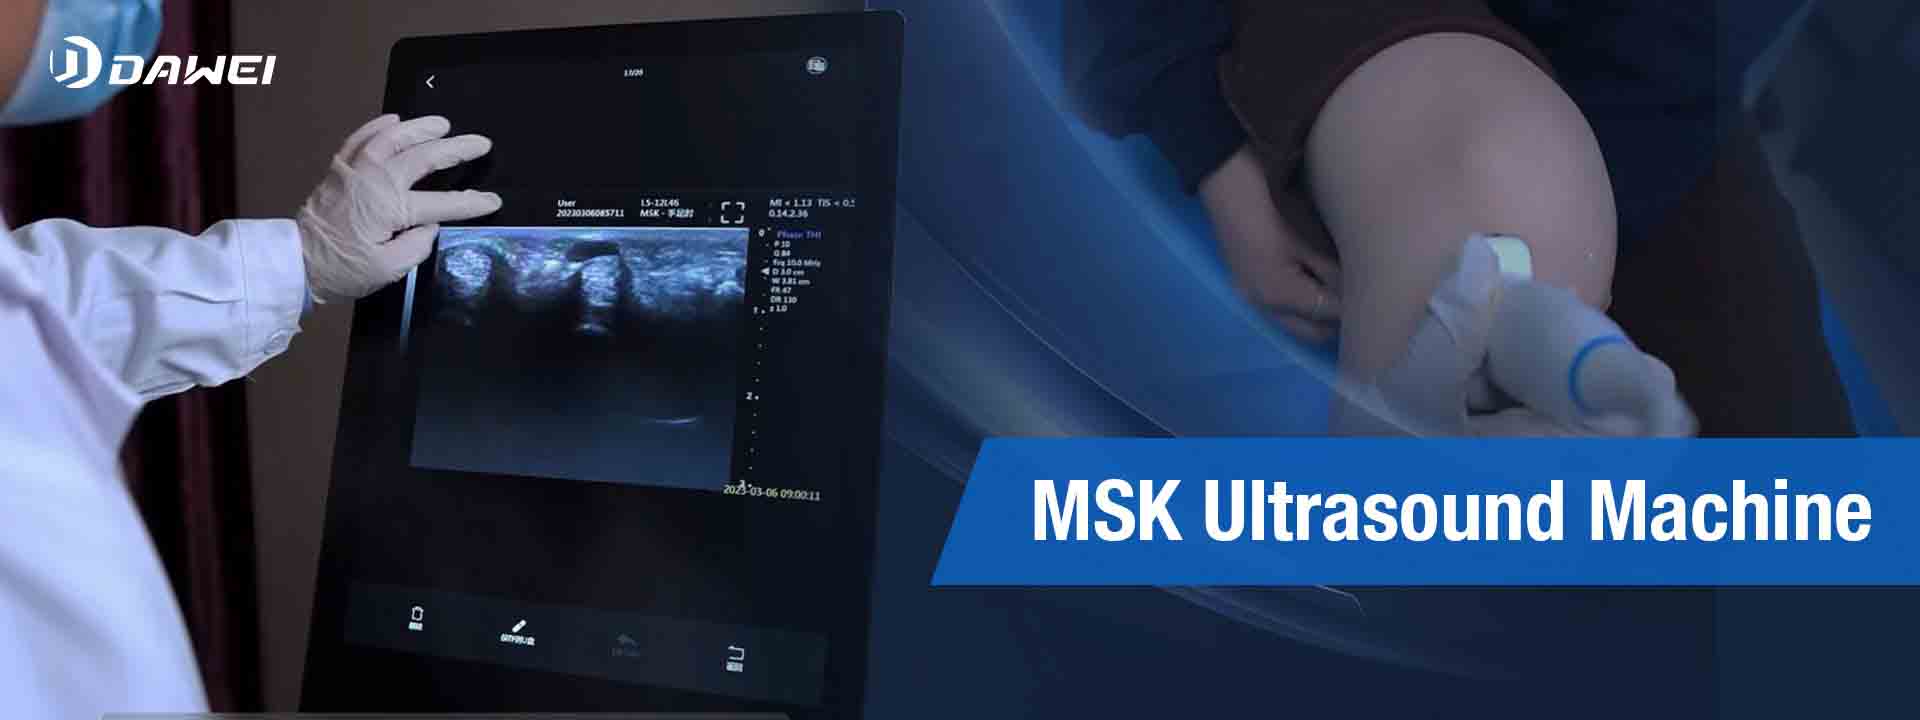 https://www.ultrasounddawei.com/news/msk-ultrasound-machine-for-sale